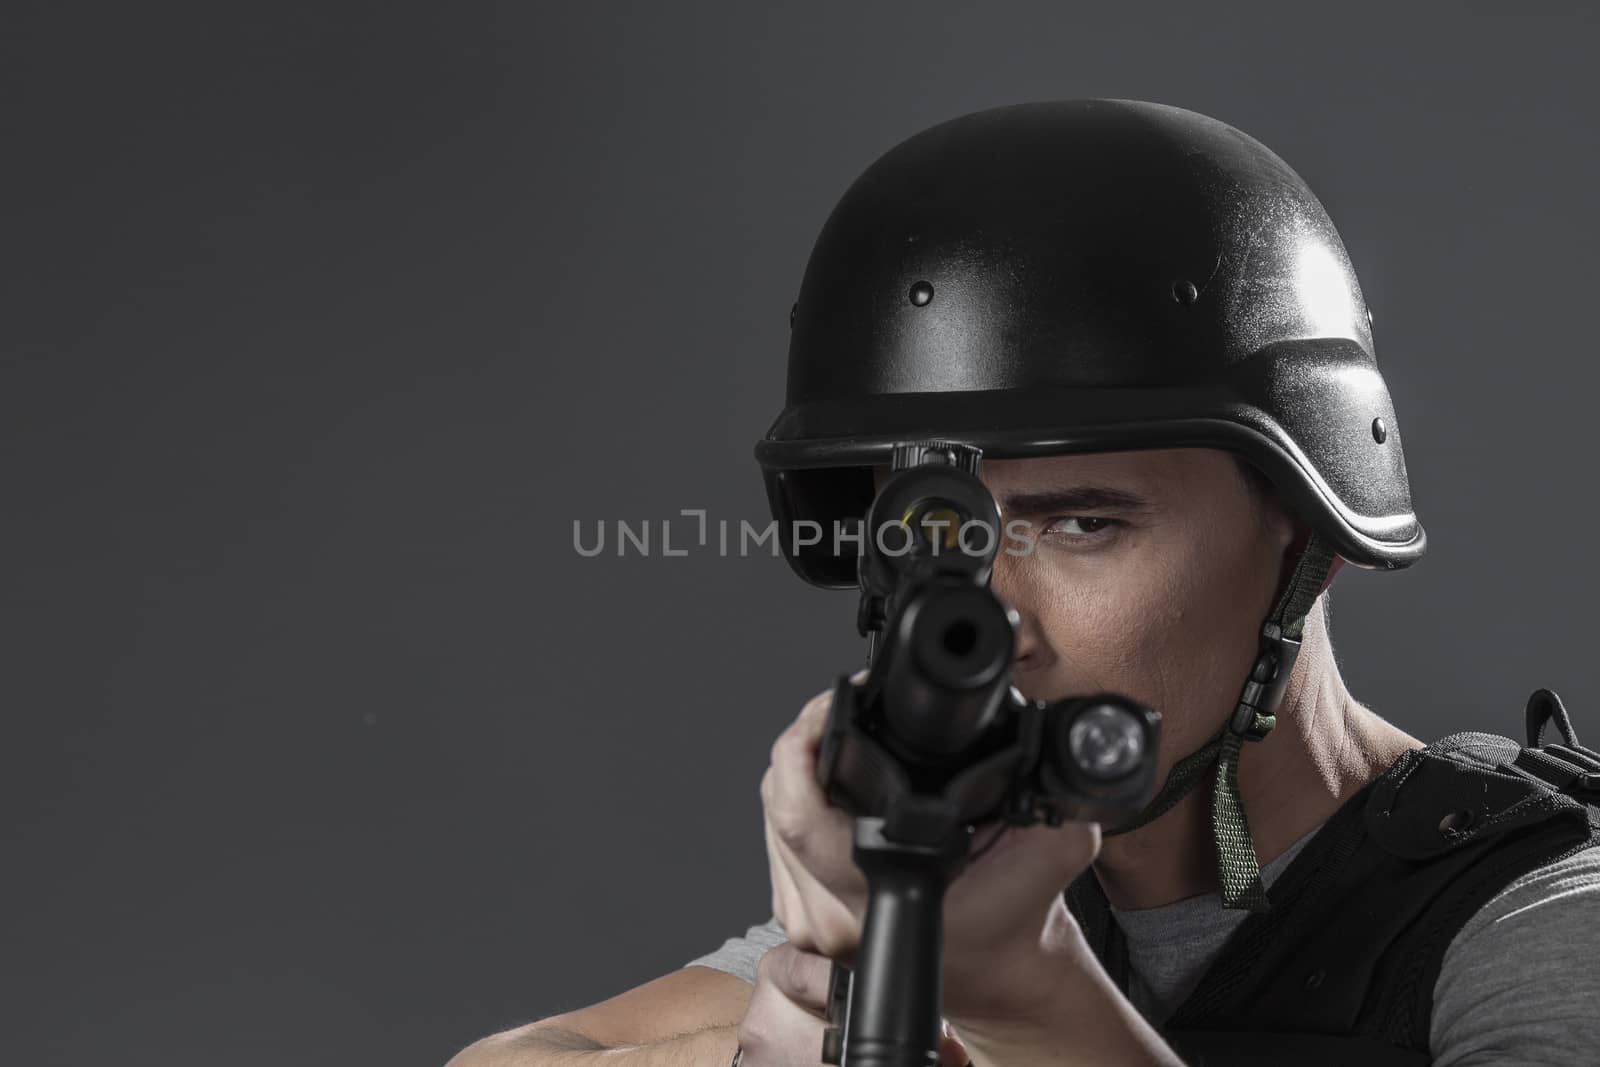 Assault, paintball sport player wearing protective helmet aiming pistol ,black armor and machine gun